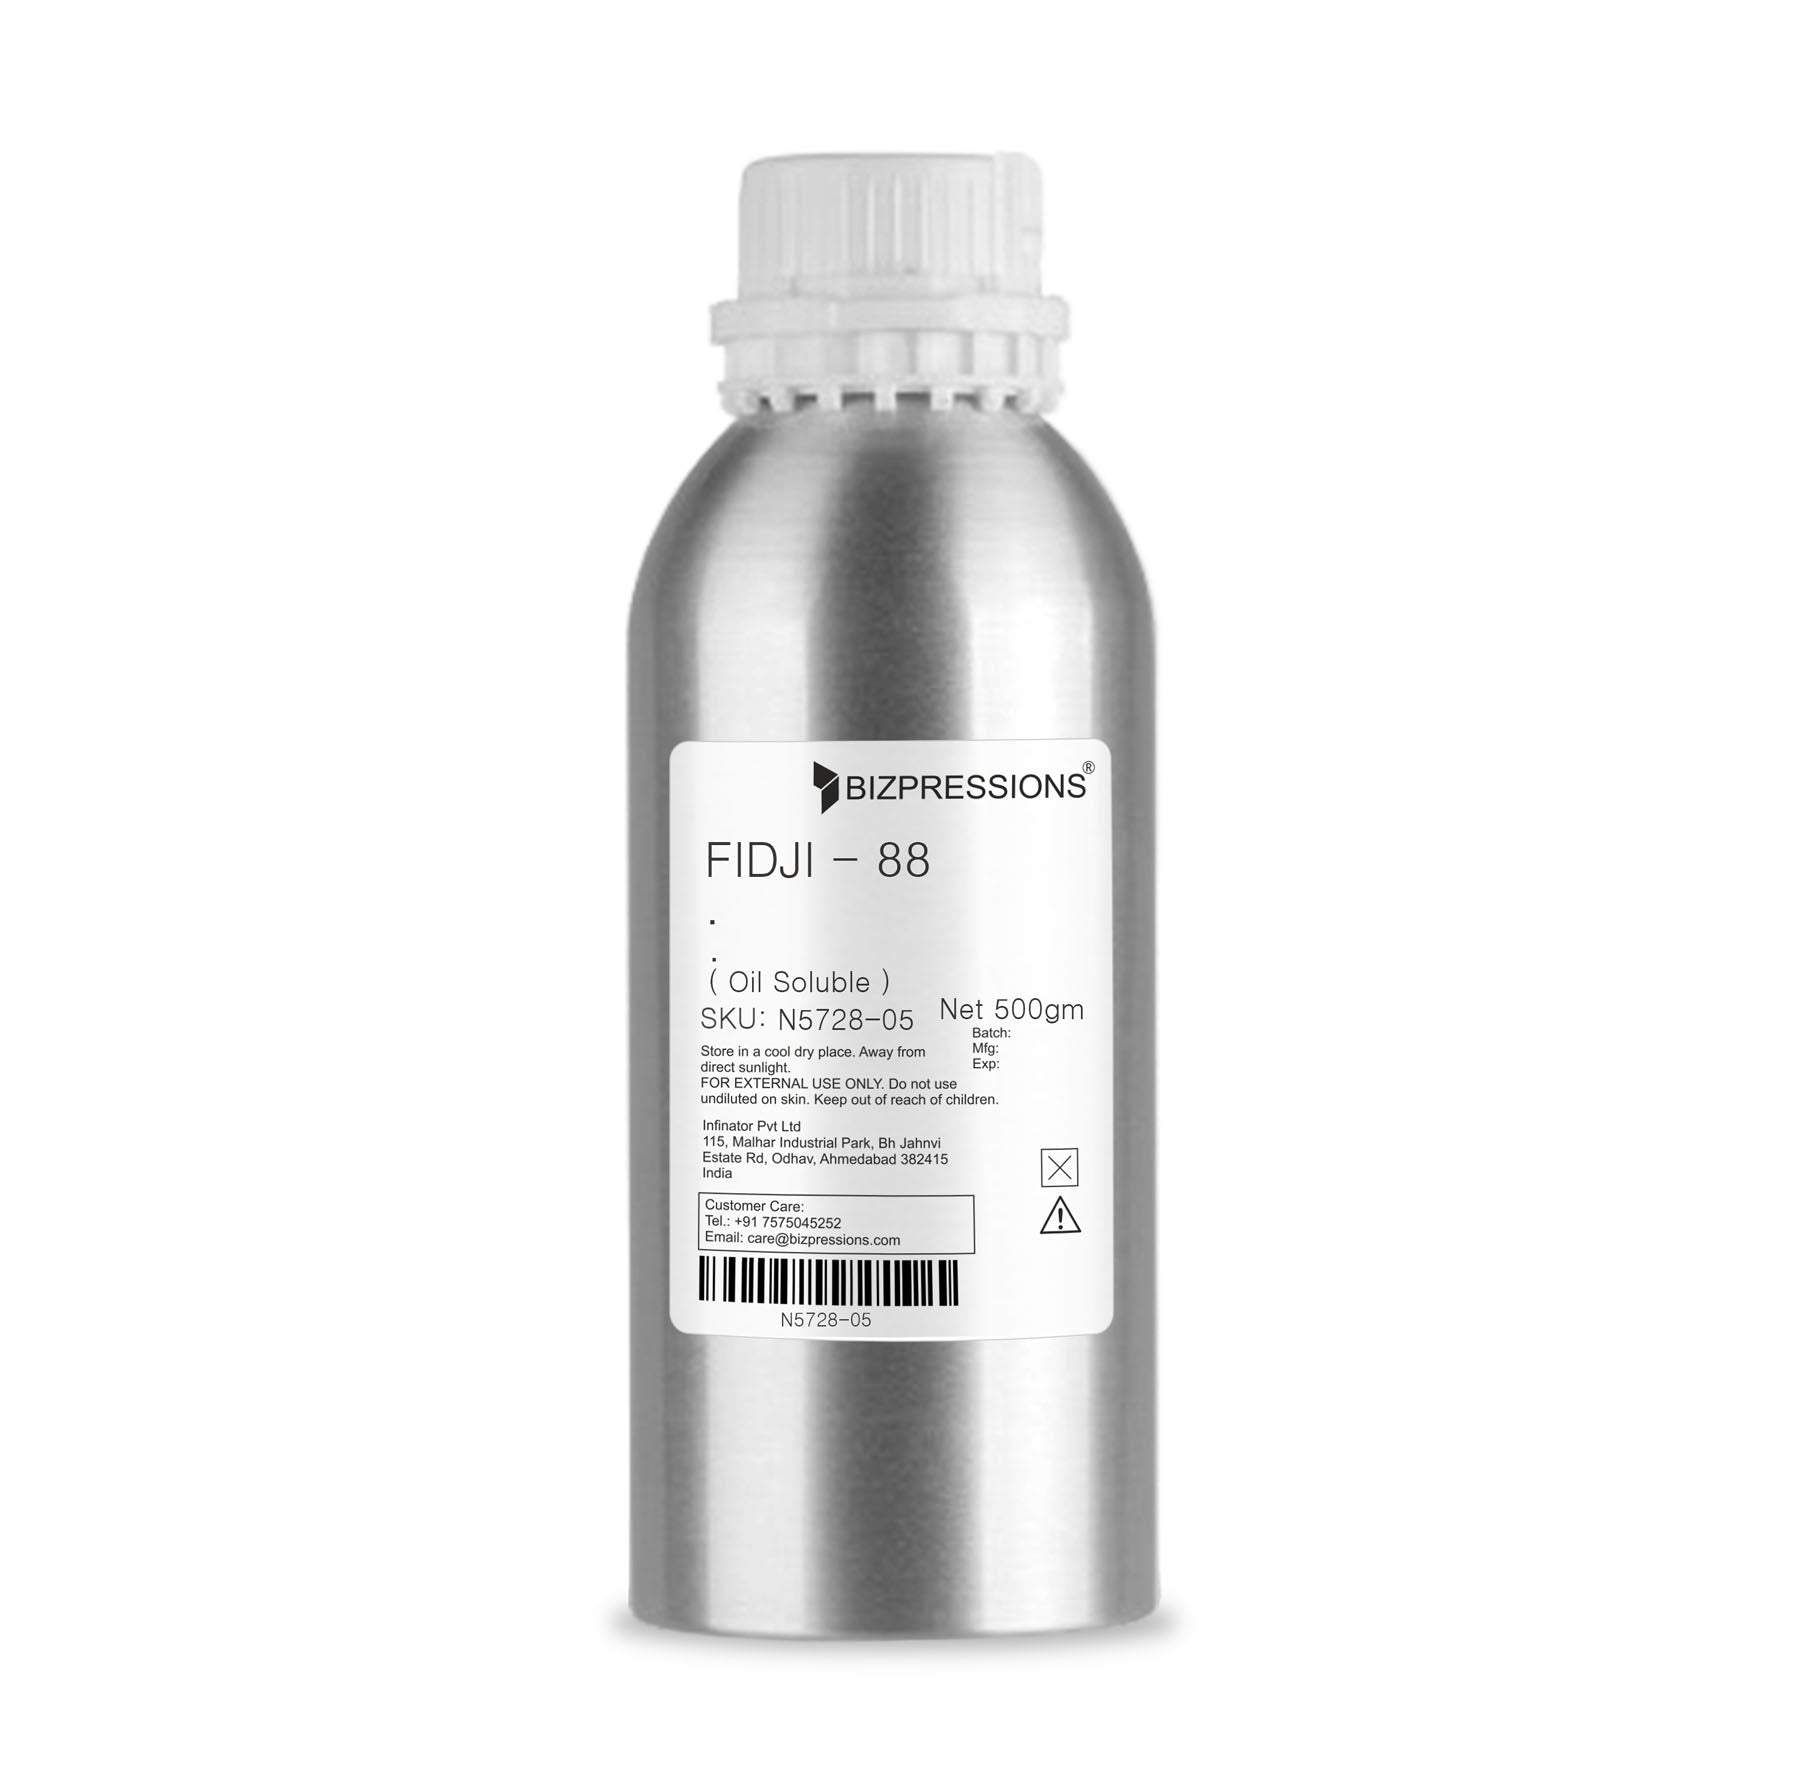 FIDJI - 88 - Fragrance ( Oil Soluble ) - 500 gm